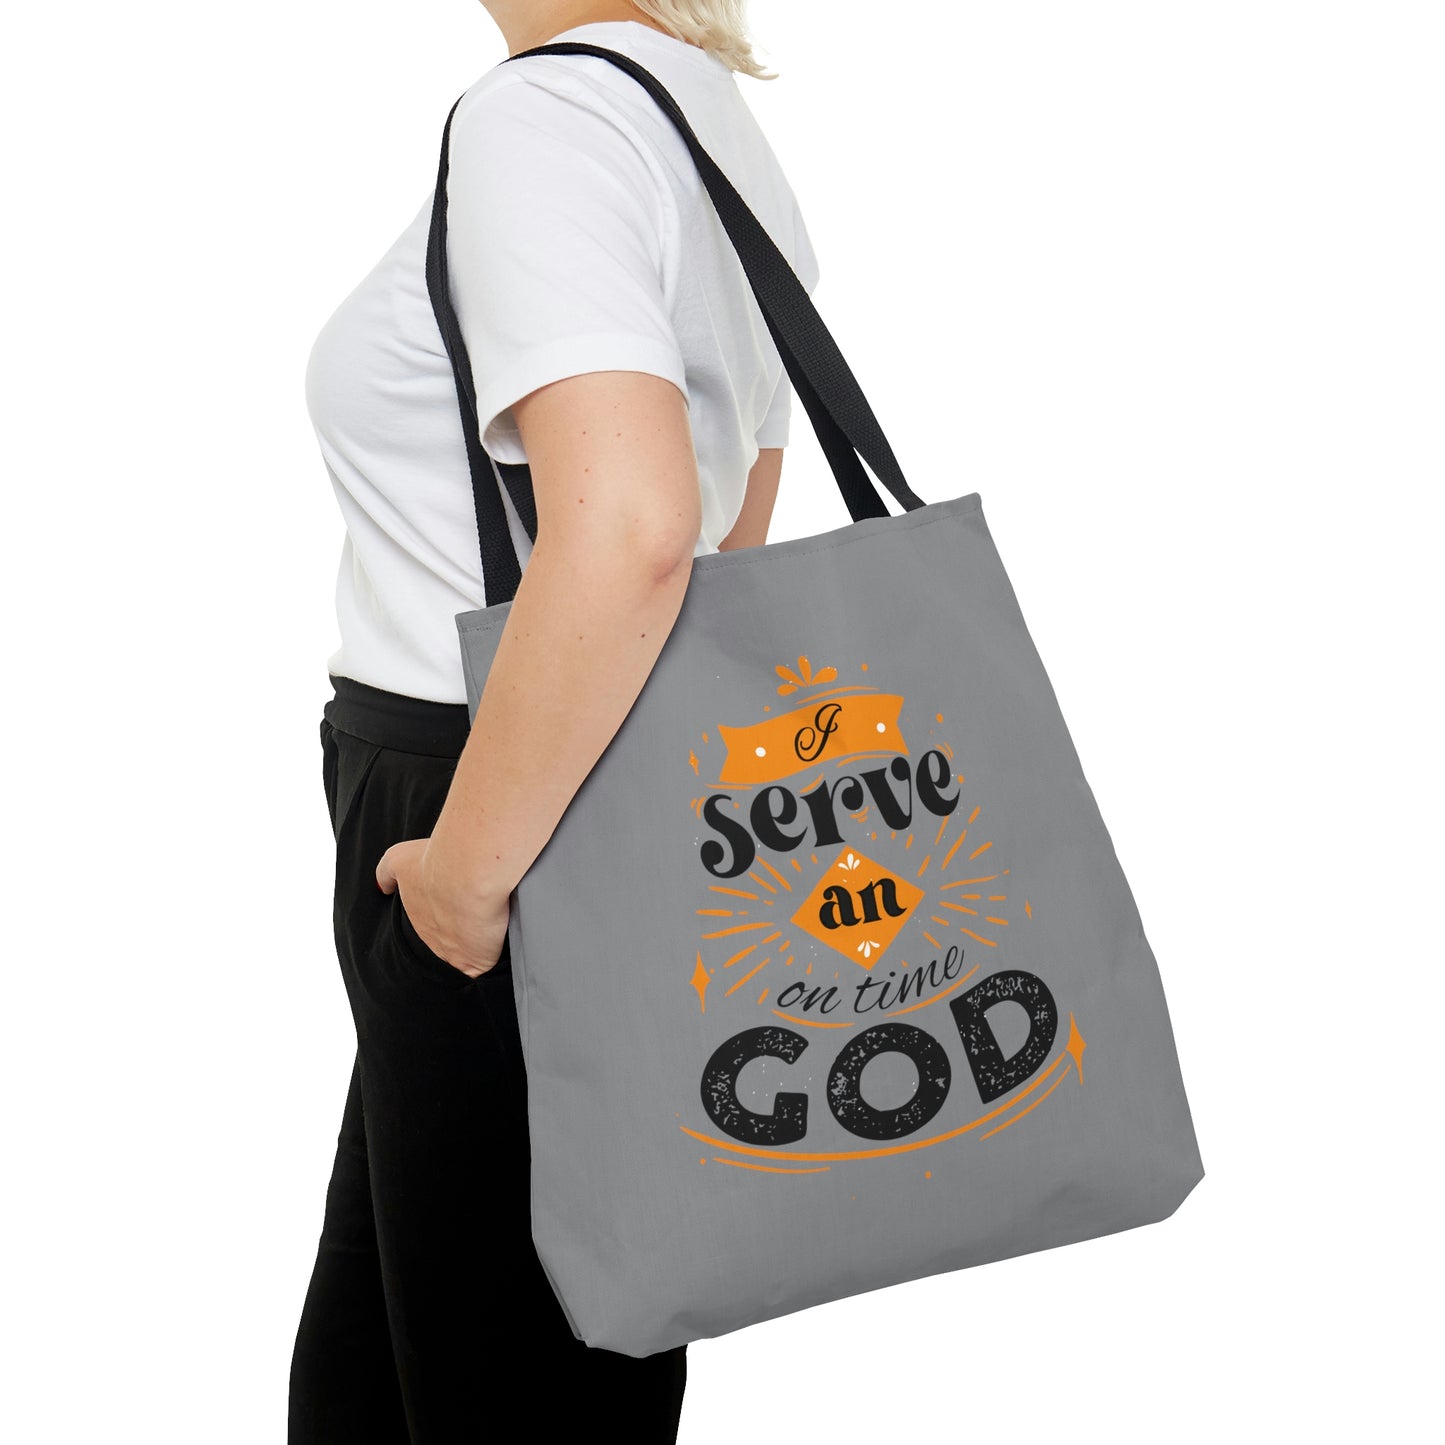 I Serve An On Time God Tote Bag